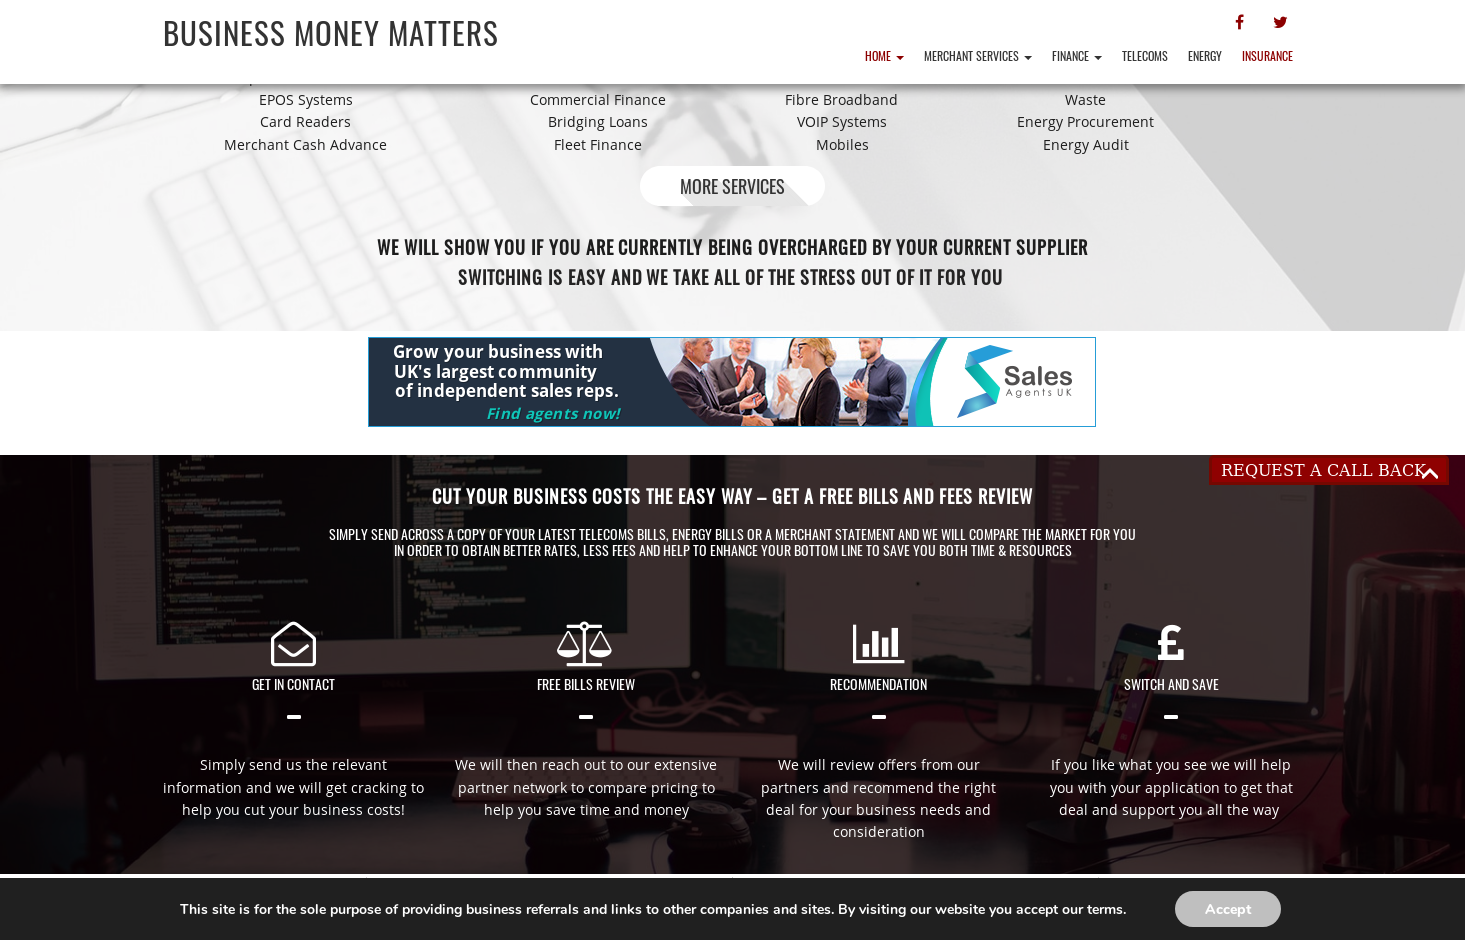 screenshot of website with image center aligned